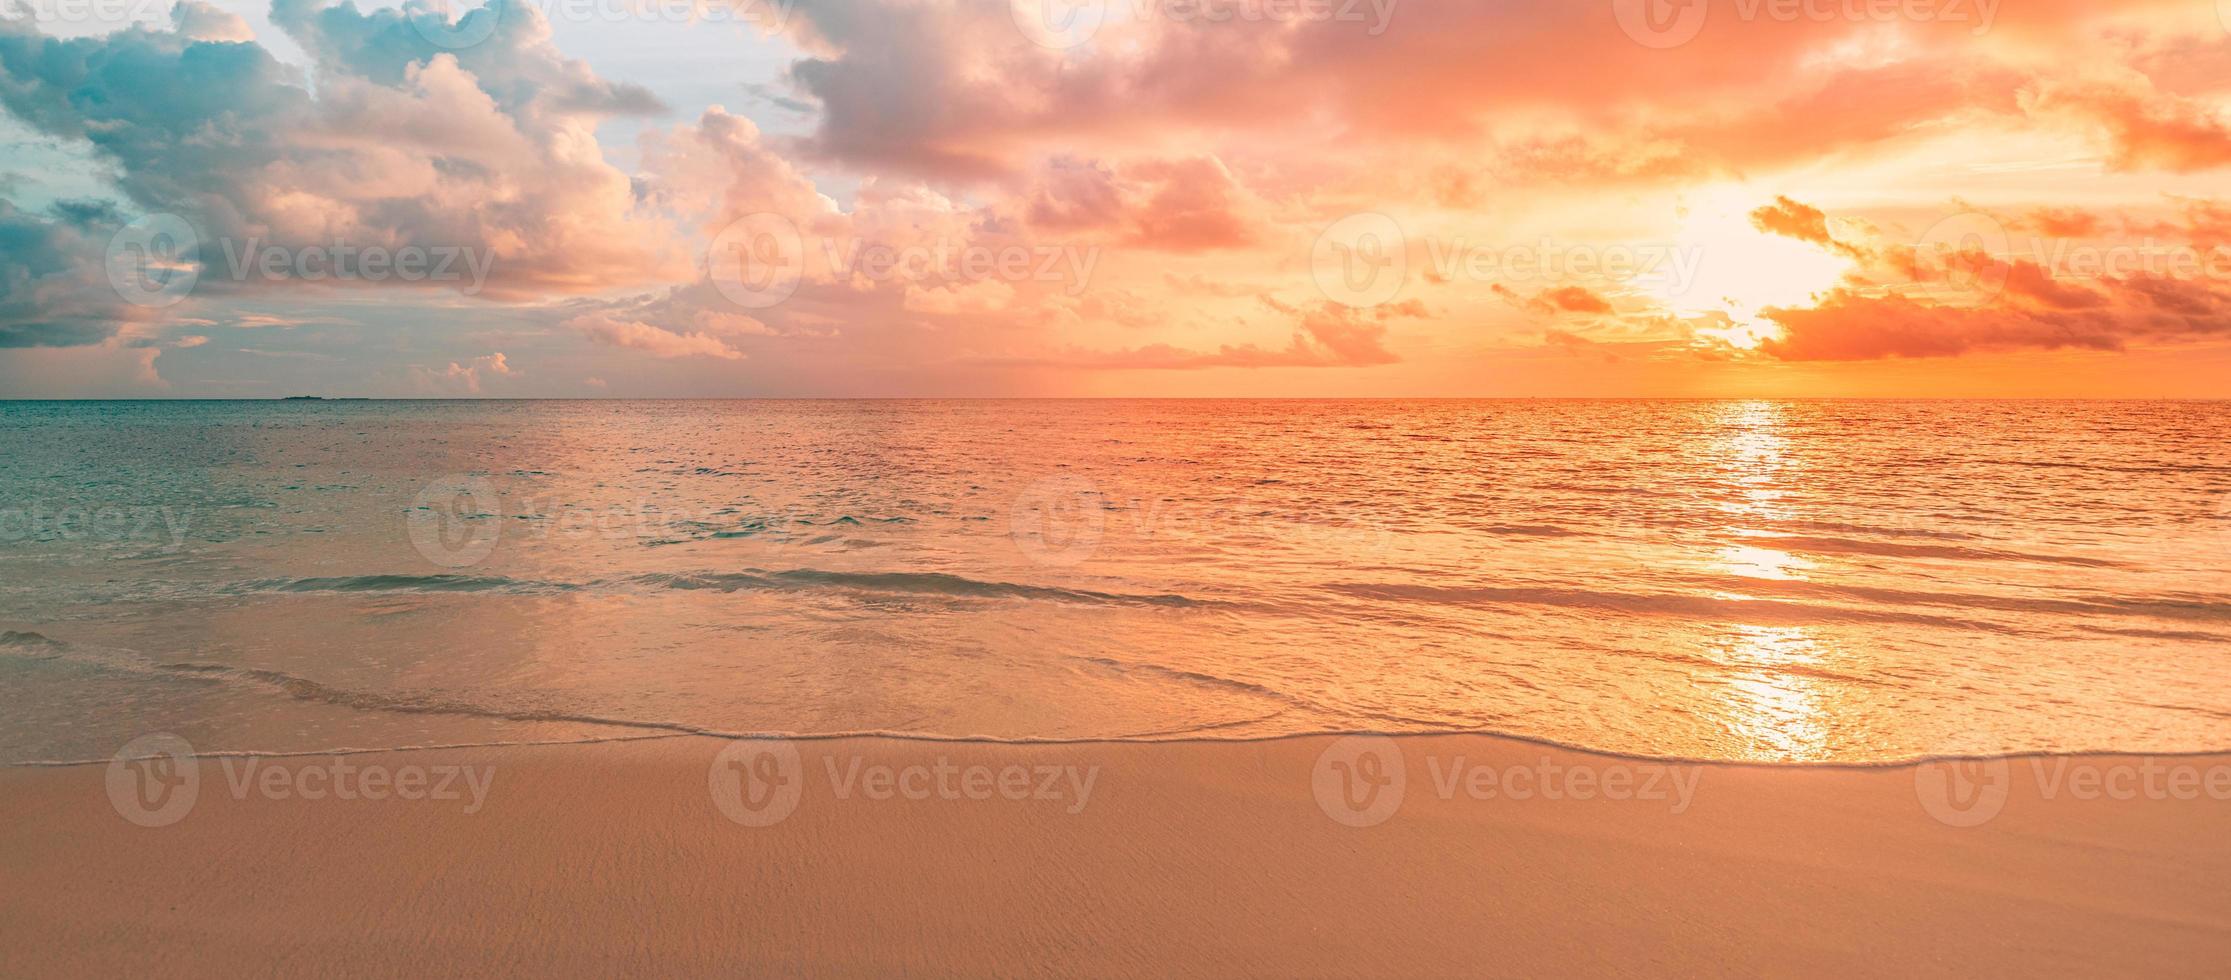 Sea sand sky beach closeup. Panoramic landscape. Inspire tropical beach coast seascape horizon. Horizon waves surf shore calmness tranquil relaxing sunlight summer mood. Vacation travel holiday banner photo